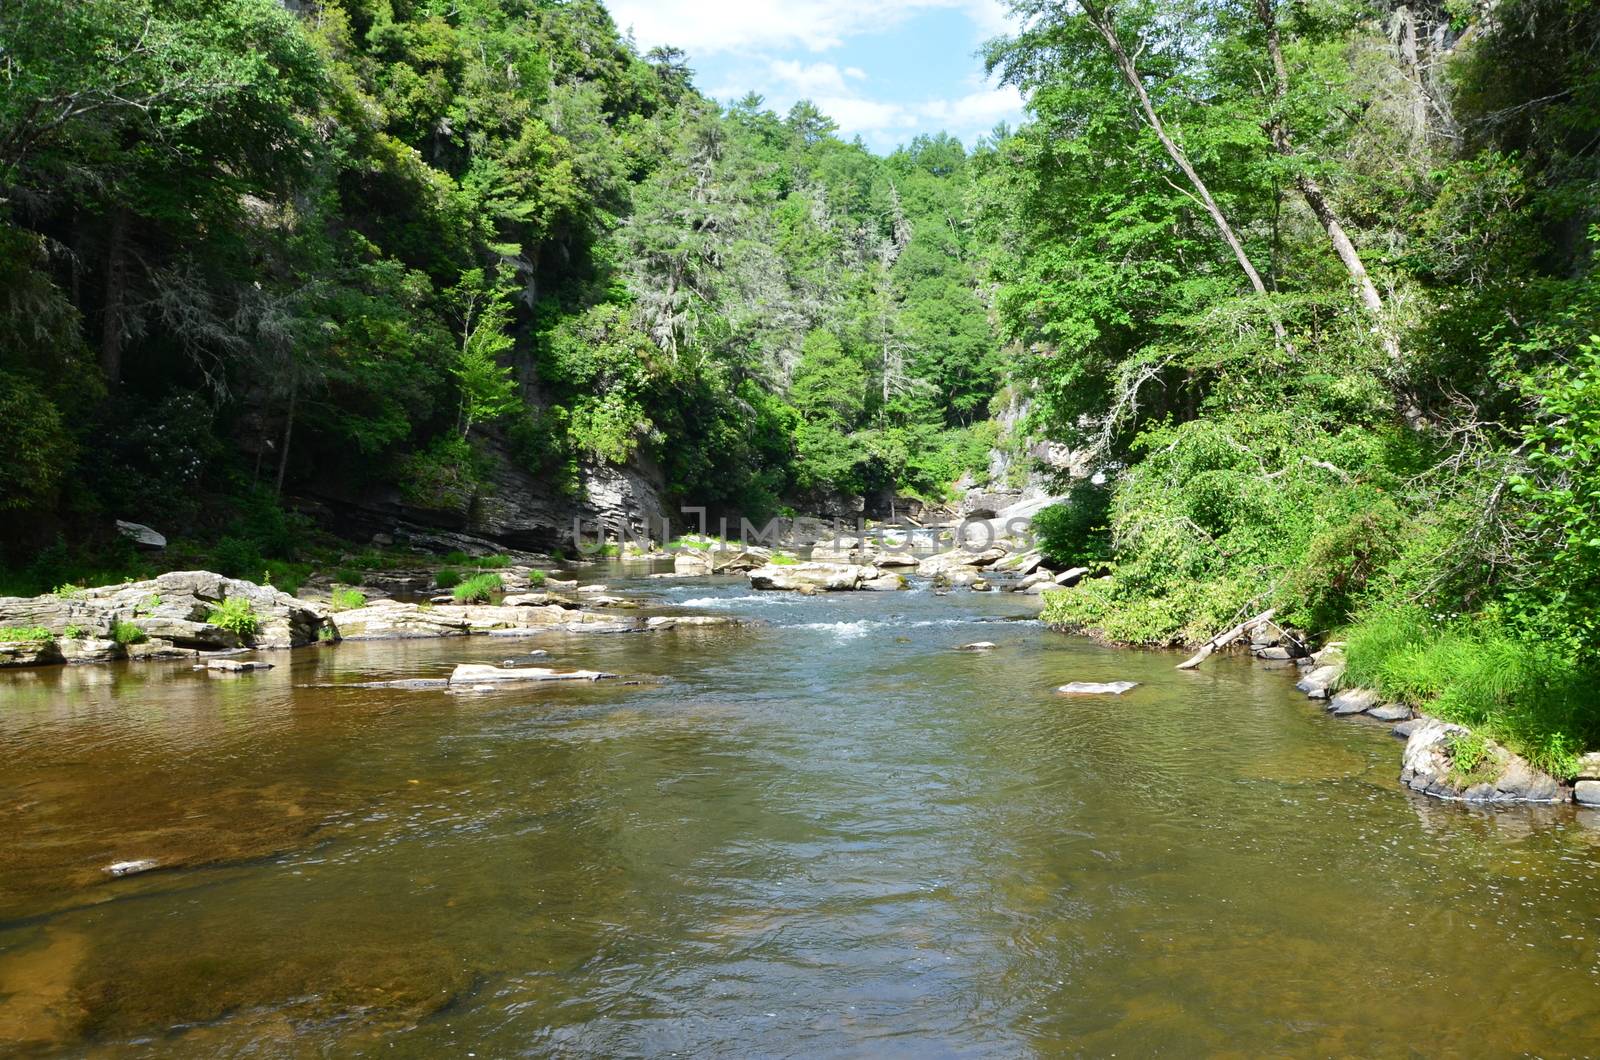 A mountain stream in the North Carolina woods near Linville Falls